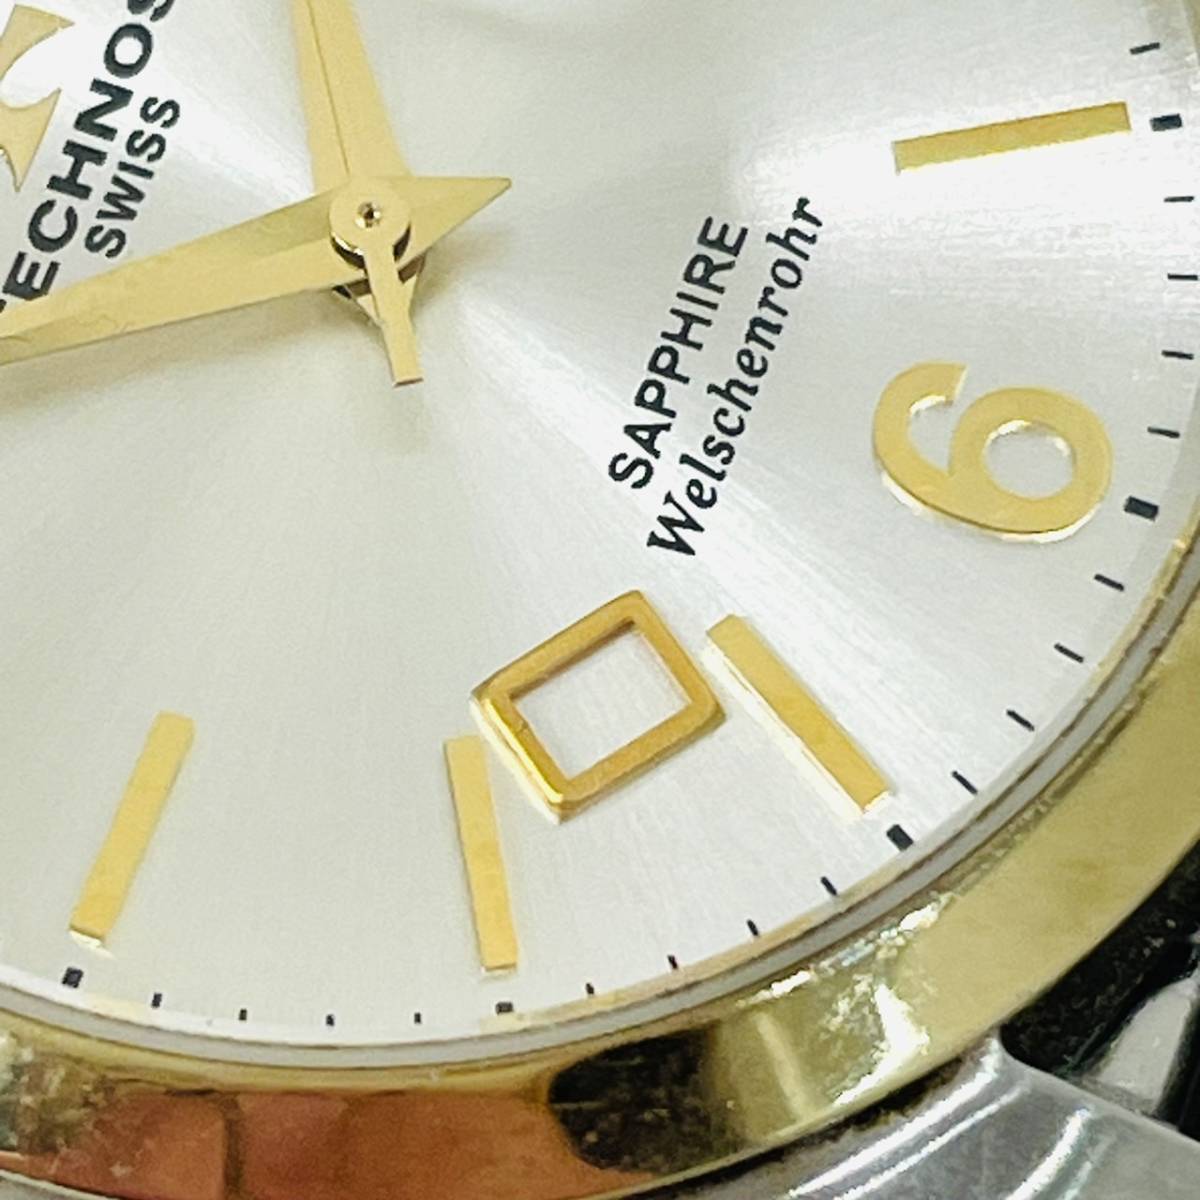 【B13136KM】現在稼働品 TECHNOS テクノス SAPPHIRE Welschenrohr TGM656 腕時計 メンズウォッチ クオーツ 白文字盤 シルバー色 ゴールド色_画像10